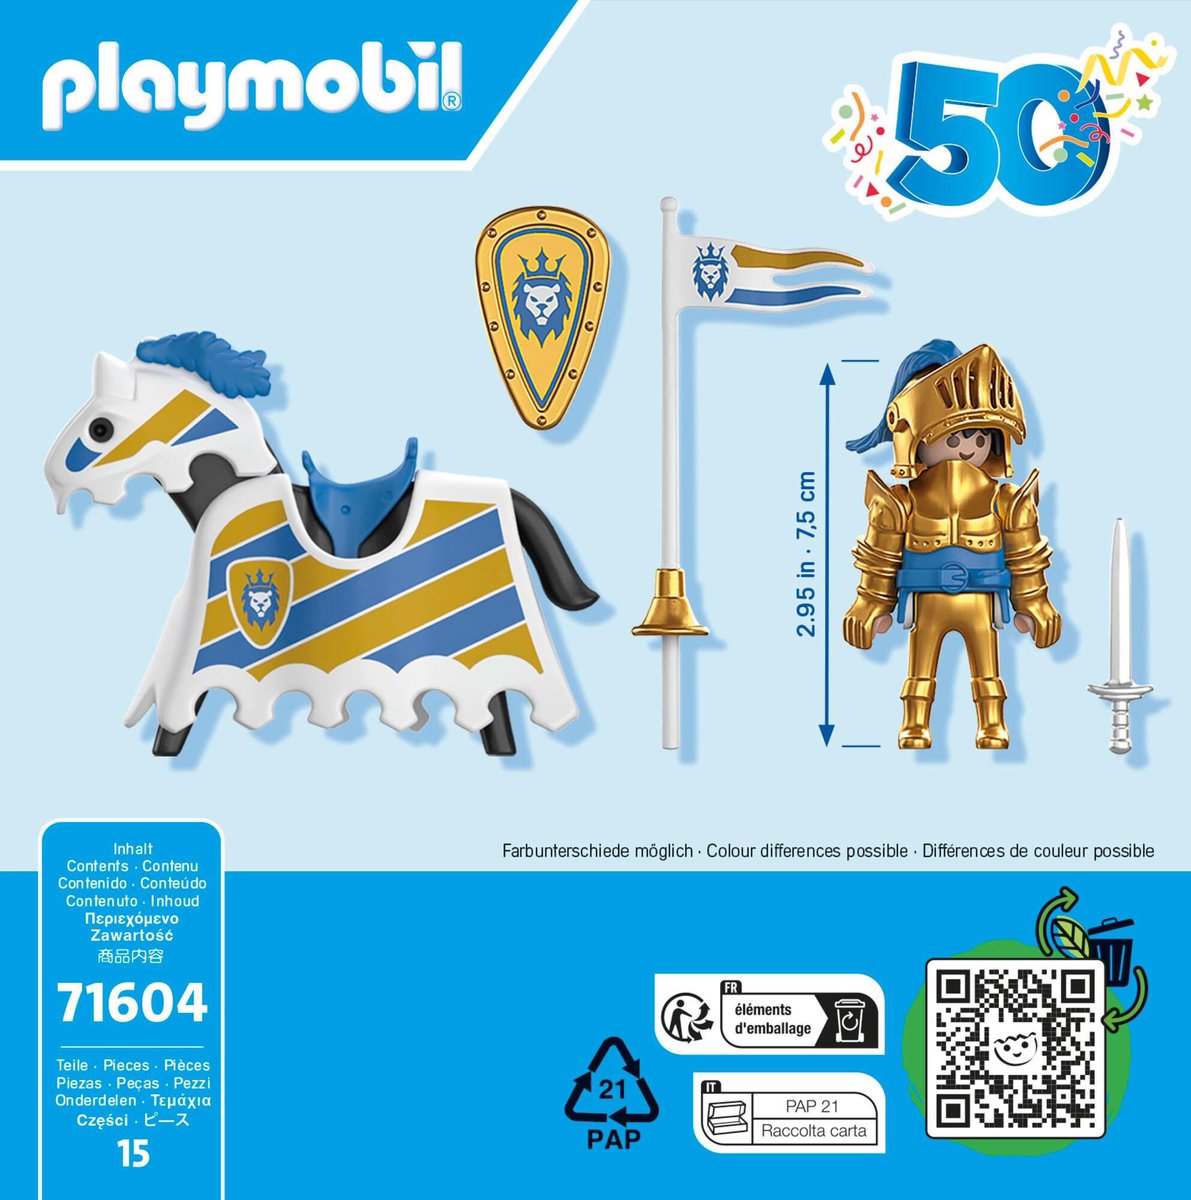 Playmobil® spécial pour les 50 ans référence 71604. #Playmobil #Playmobilworld #Playmobilespana #Playmobilfrance #Playmobil50years  #Playmobil71604